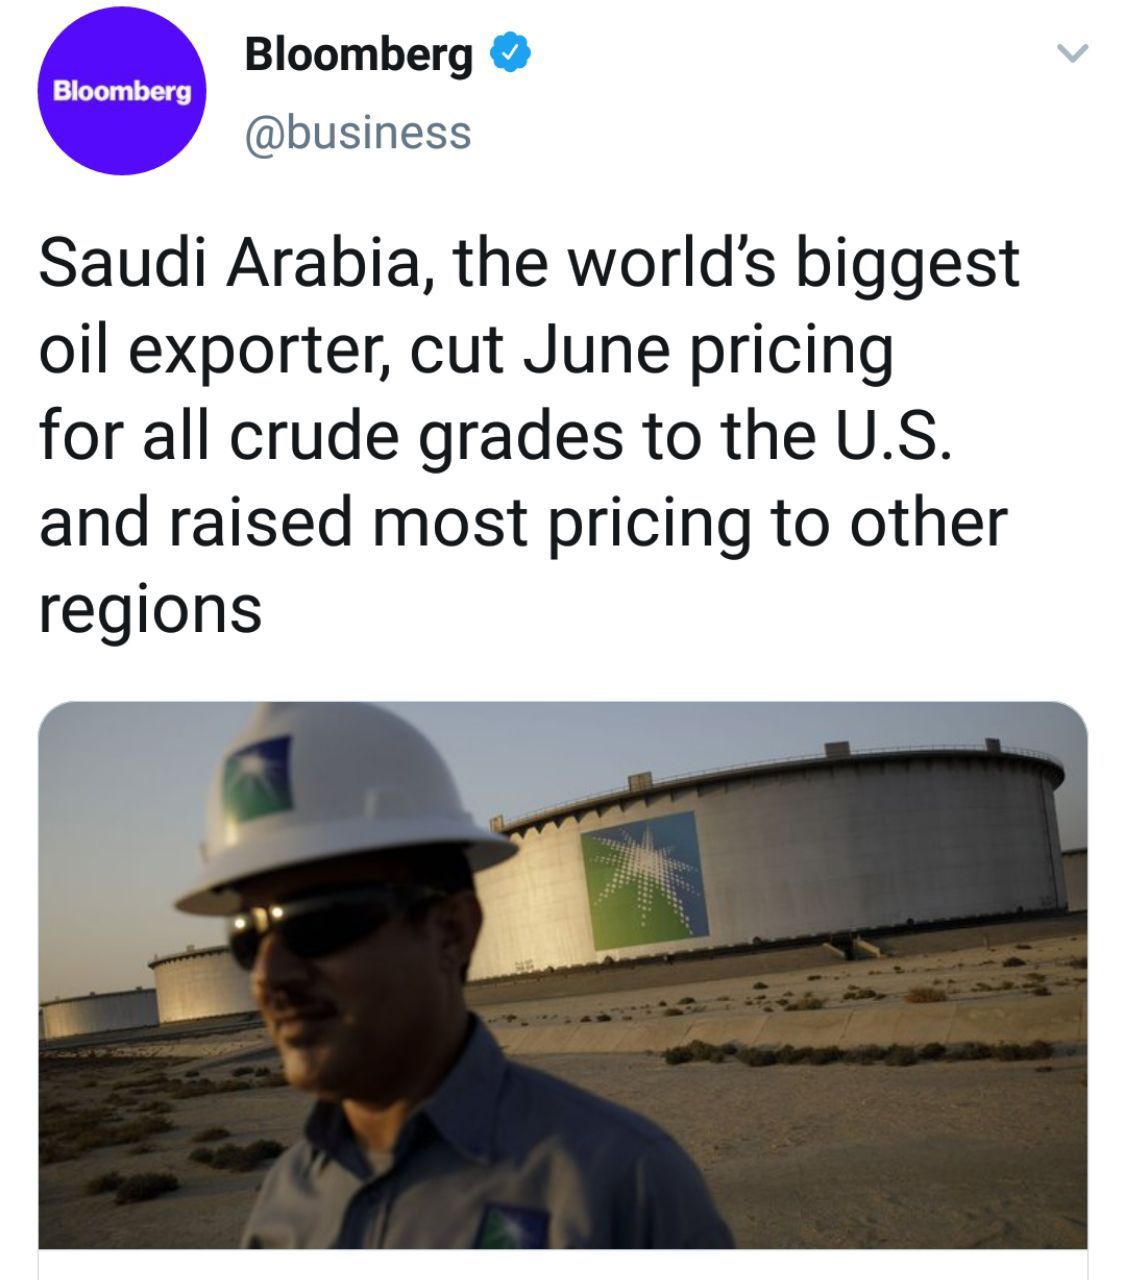 ▪️‏عربستان قیمت همه انواع نفت ارسالی‌اش به آمریکا را در ماه ژوئن کاهش داده و در عوض قیمت نفت برای مشتریان آسیایی‌اش را به بالاترین رقم طی سال‌های ۲۰۱۲ و ۲۰۱۳ برده است